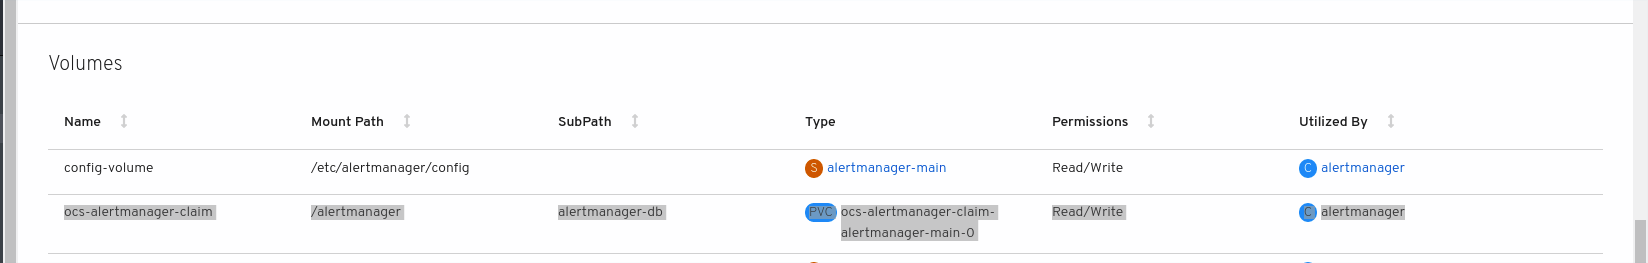 OpenShift Web 控制台的截图显示附加到 changemanager pod 的持久卷声明